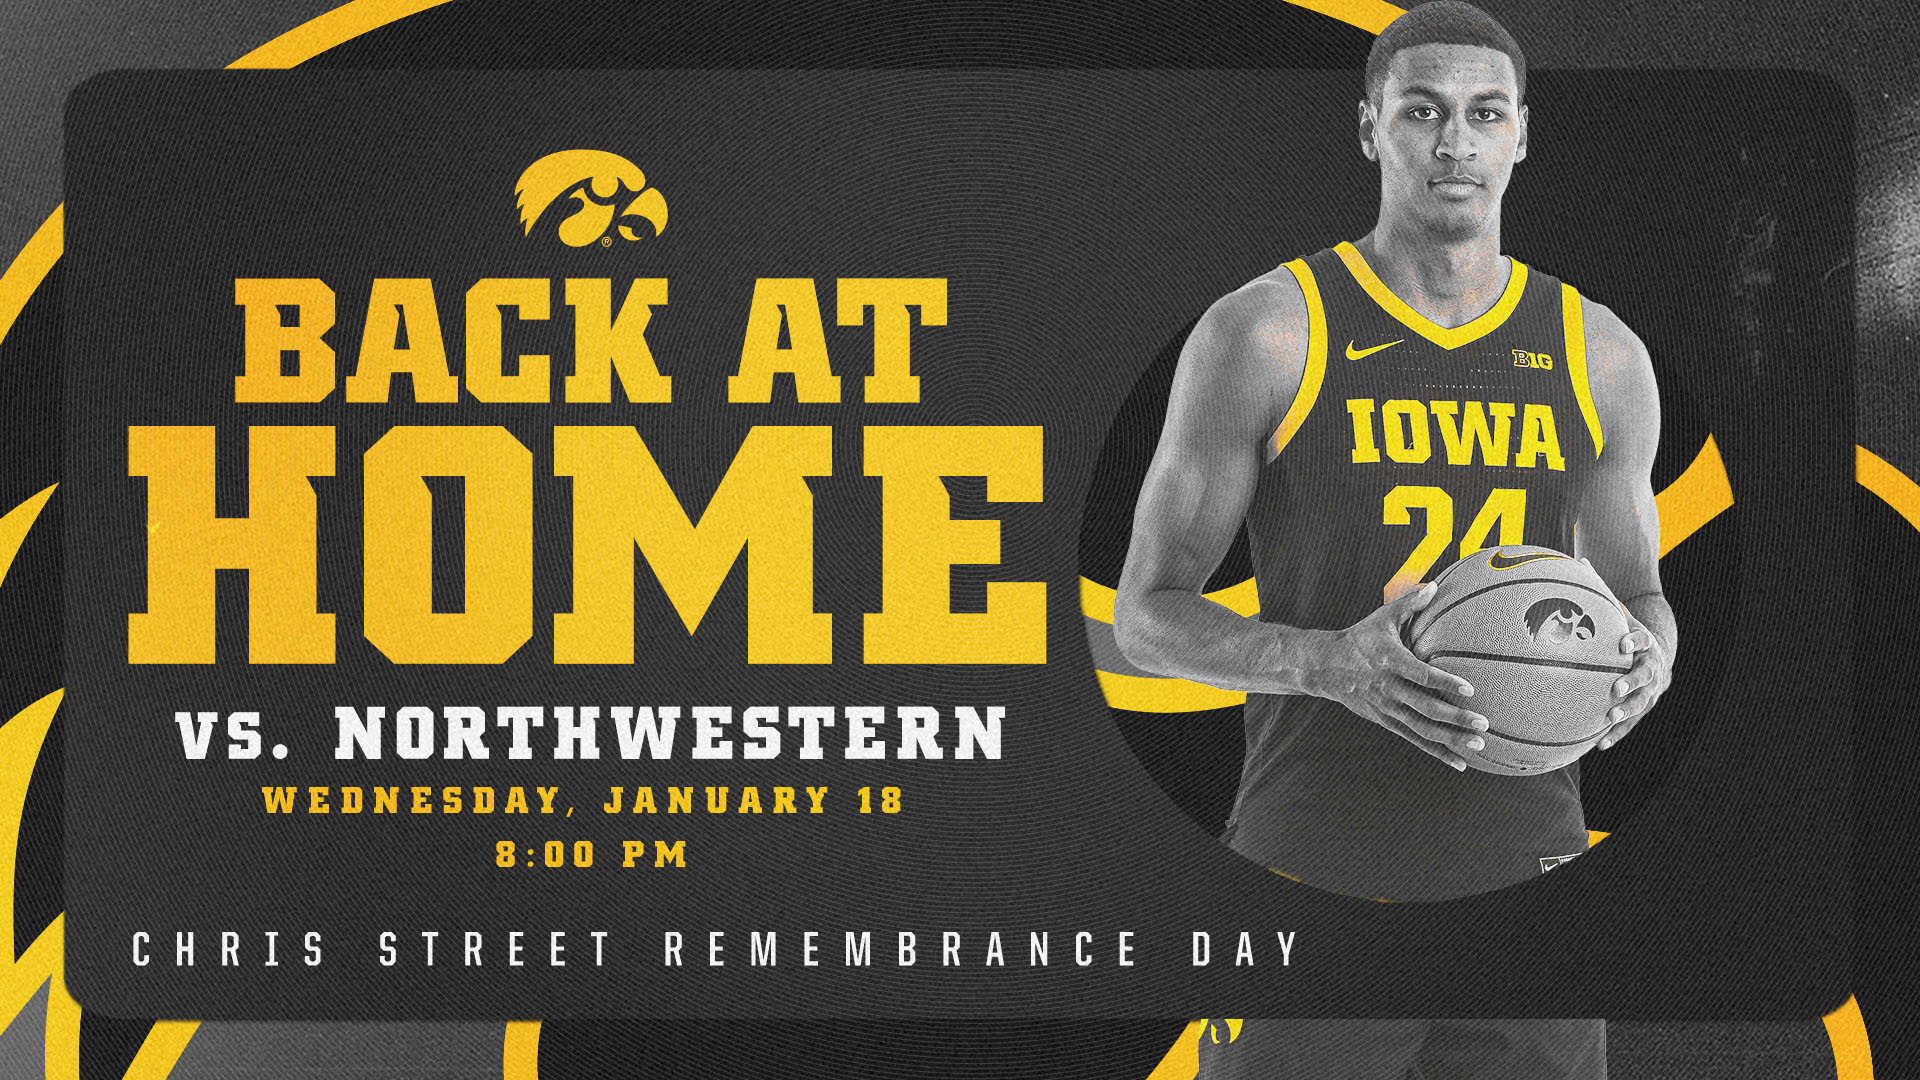 Back at Home vs. Northwestern, Wednesday, Jan 18 at 8pm